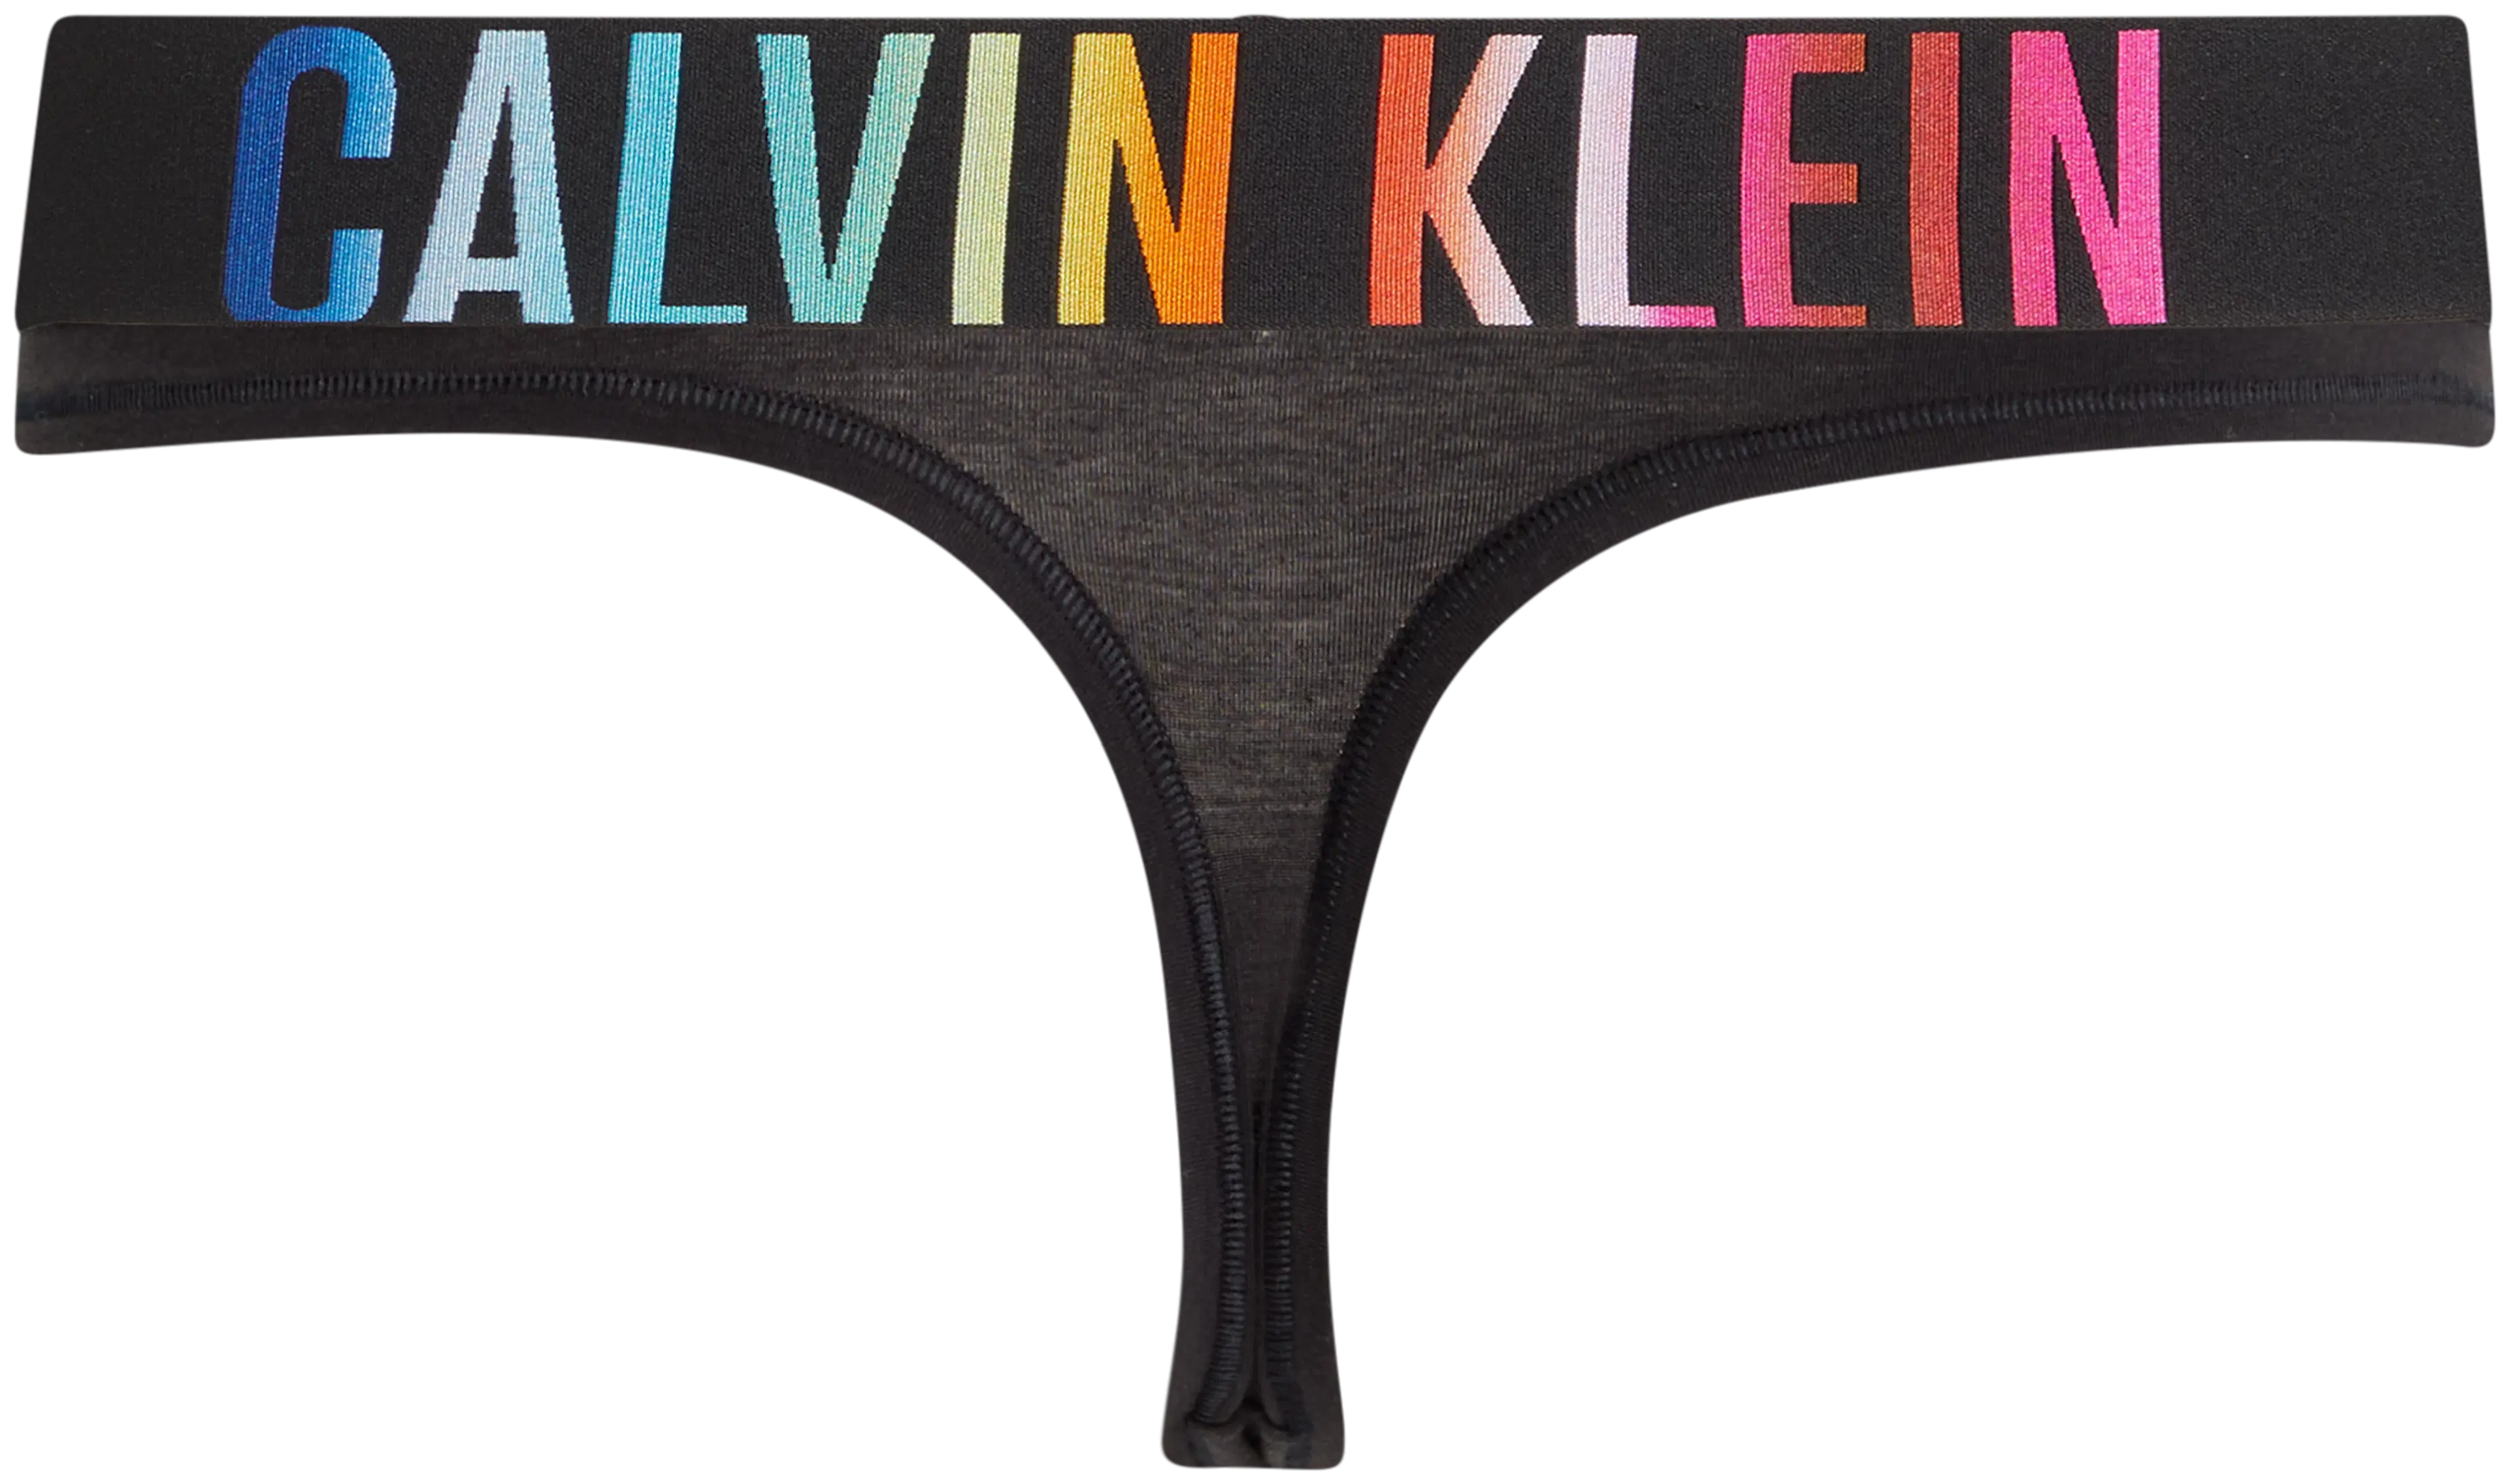 Calvin Klein Intensive Power Pride Cotton Thong alushousut